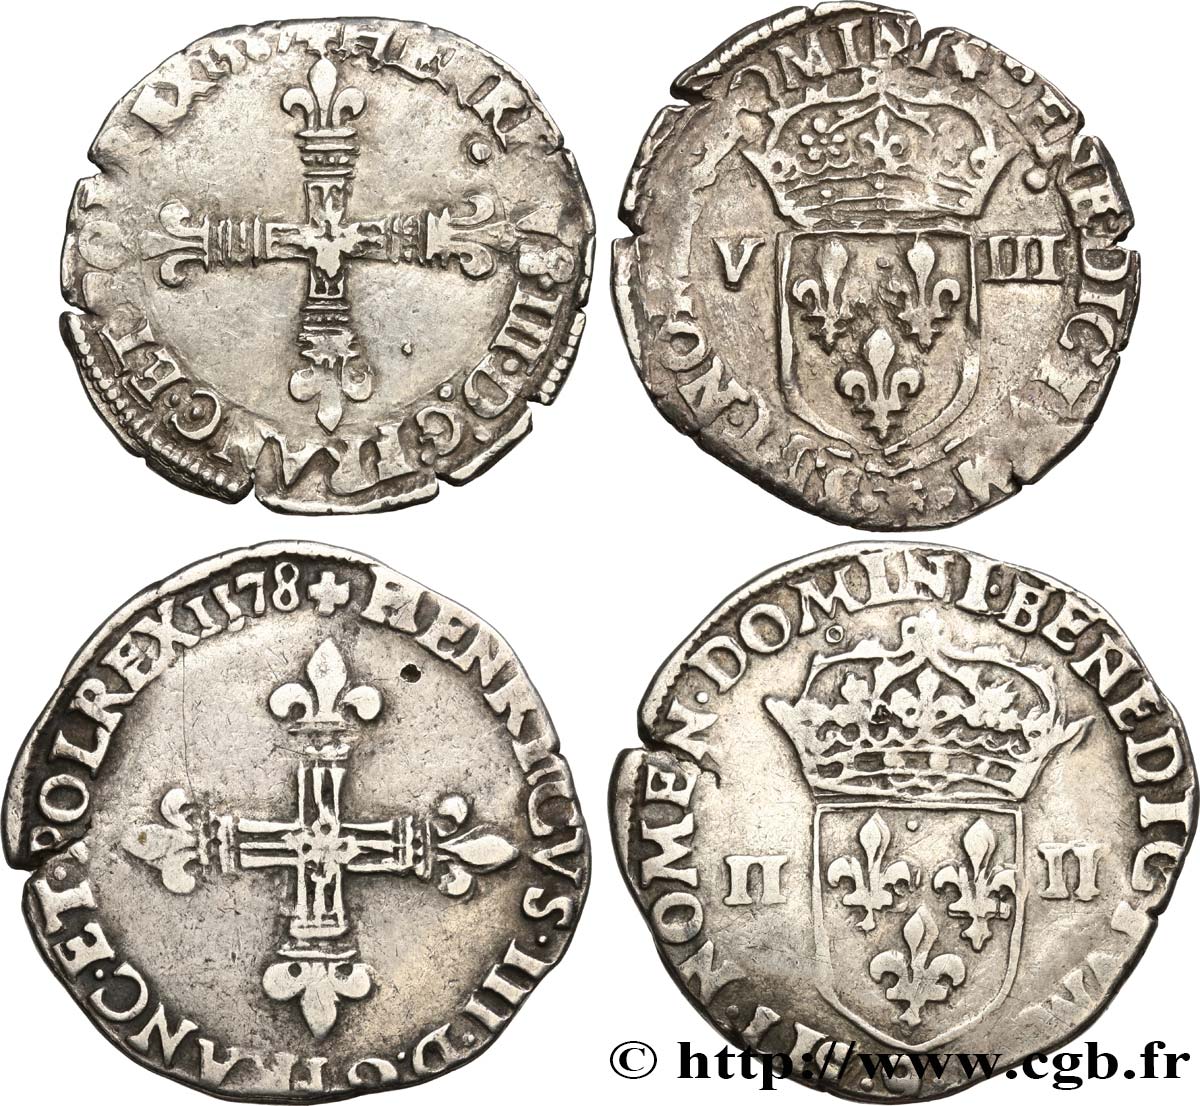 HENRY III Lot de 2 monnaies royales n.d. Ateliers divers VF